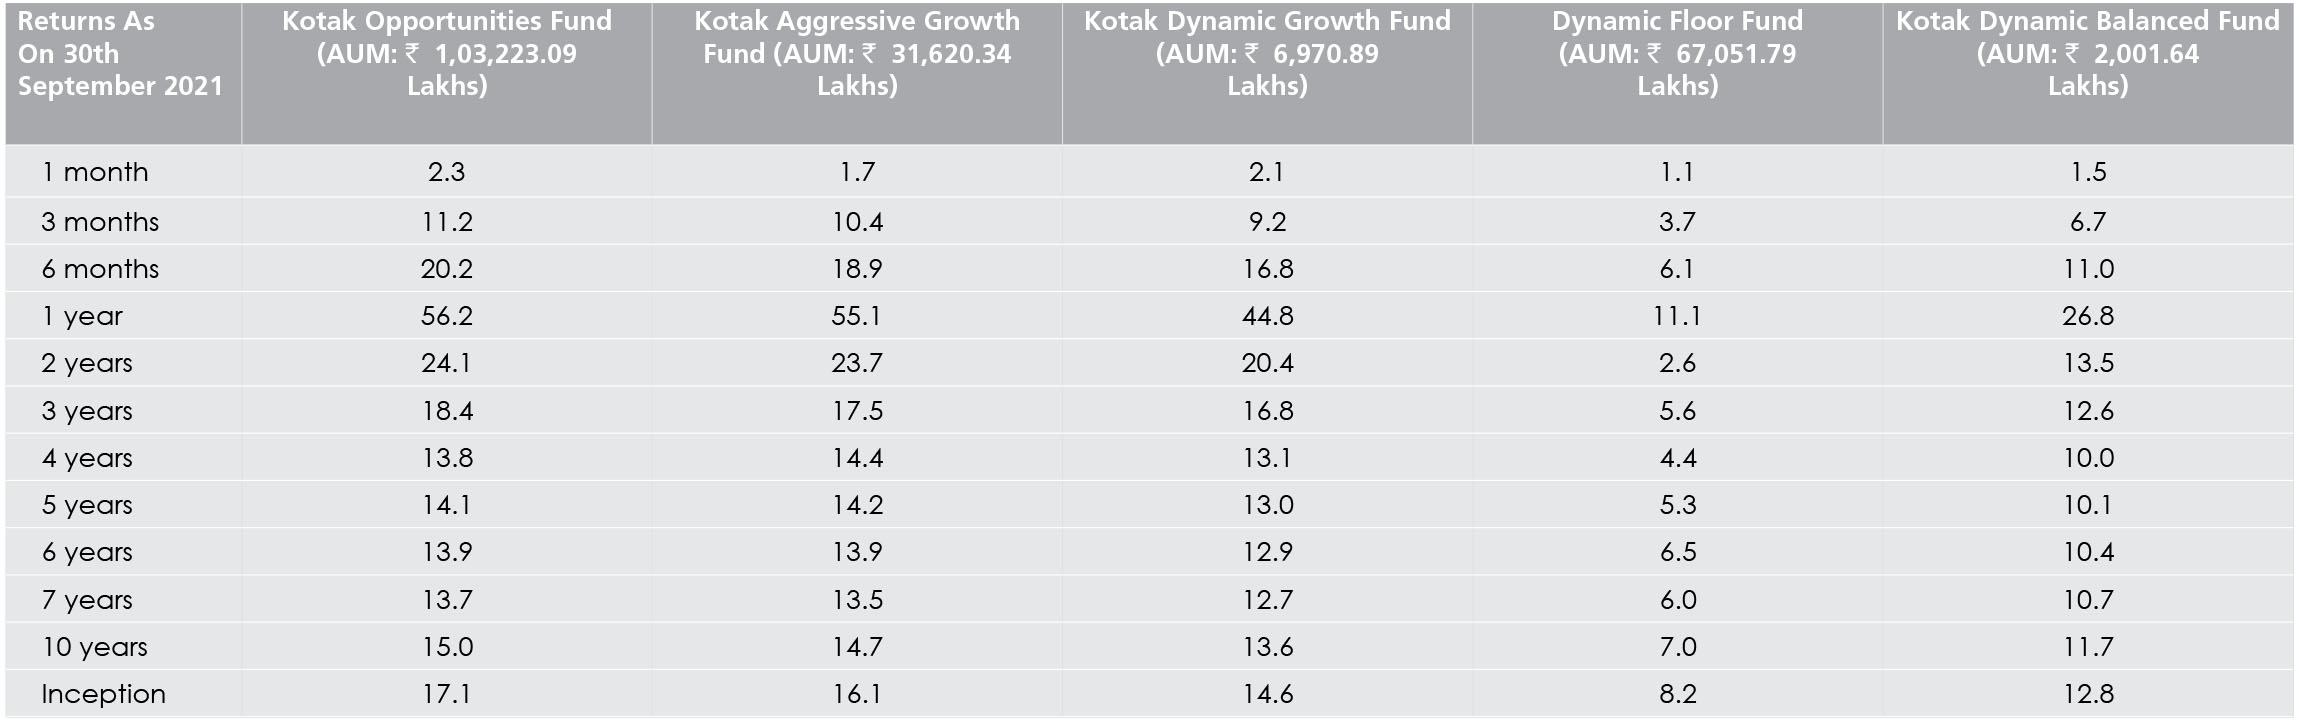 performance of kotak Investemets as on 30 sep 2021 